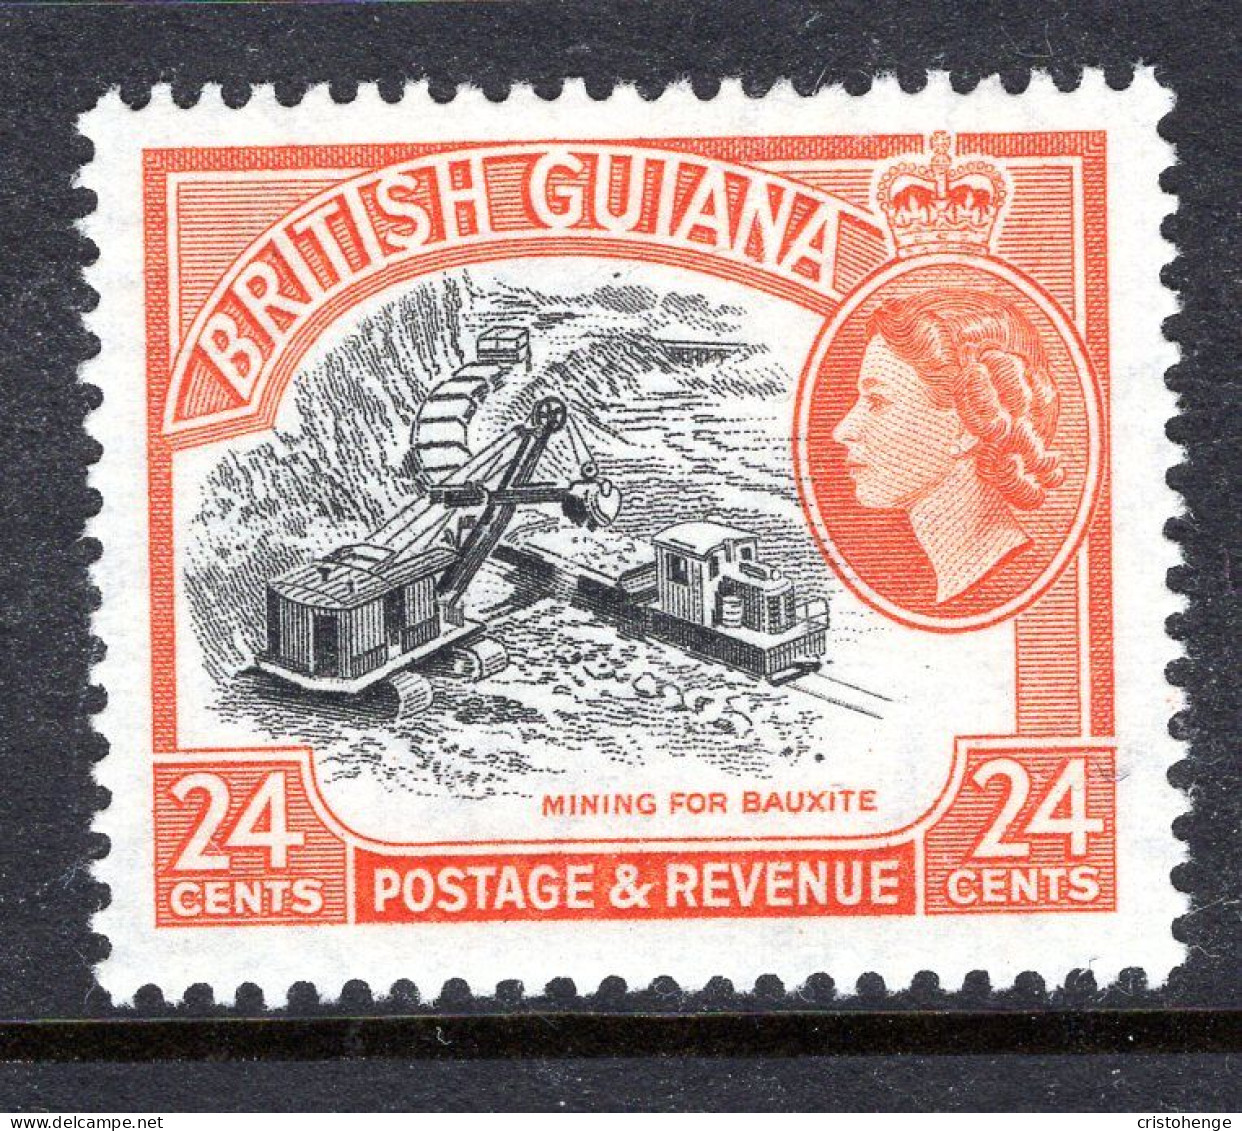 British Guiana 1954-63 QEII Pictorials - 24c Mining Bauxite - Orange - LHM (SG 339a) - British Guiana (...-1966)